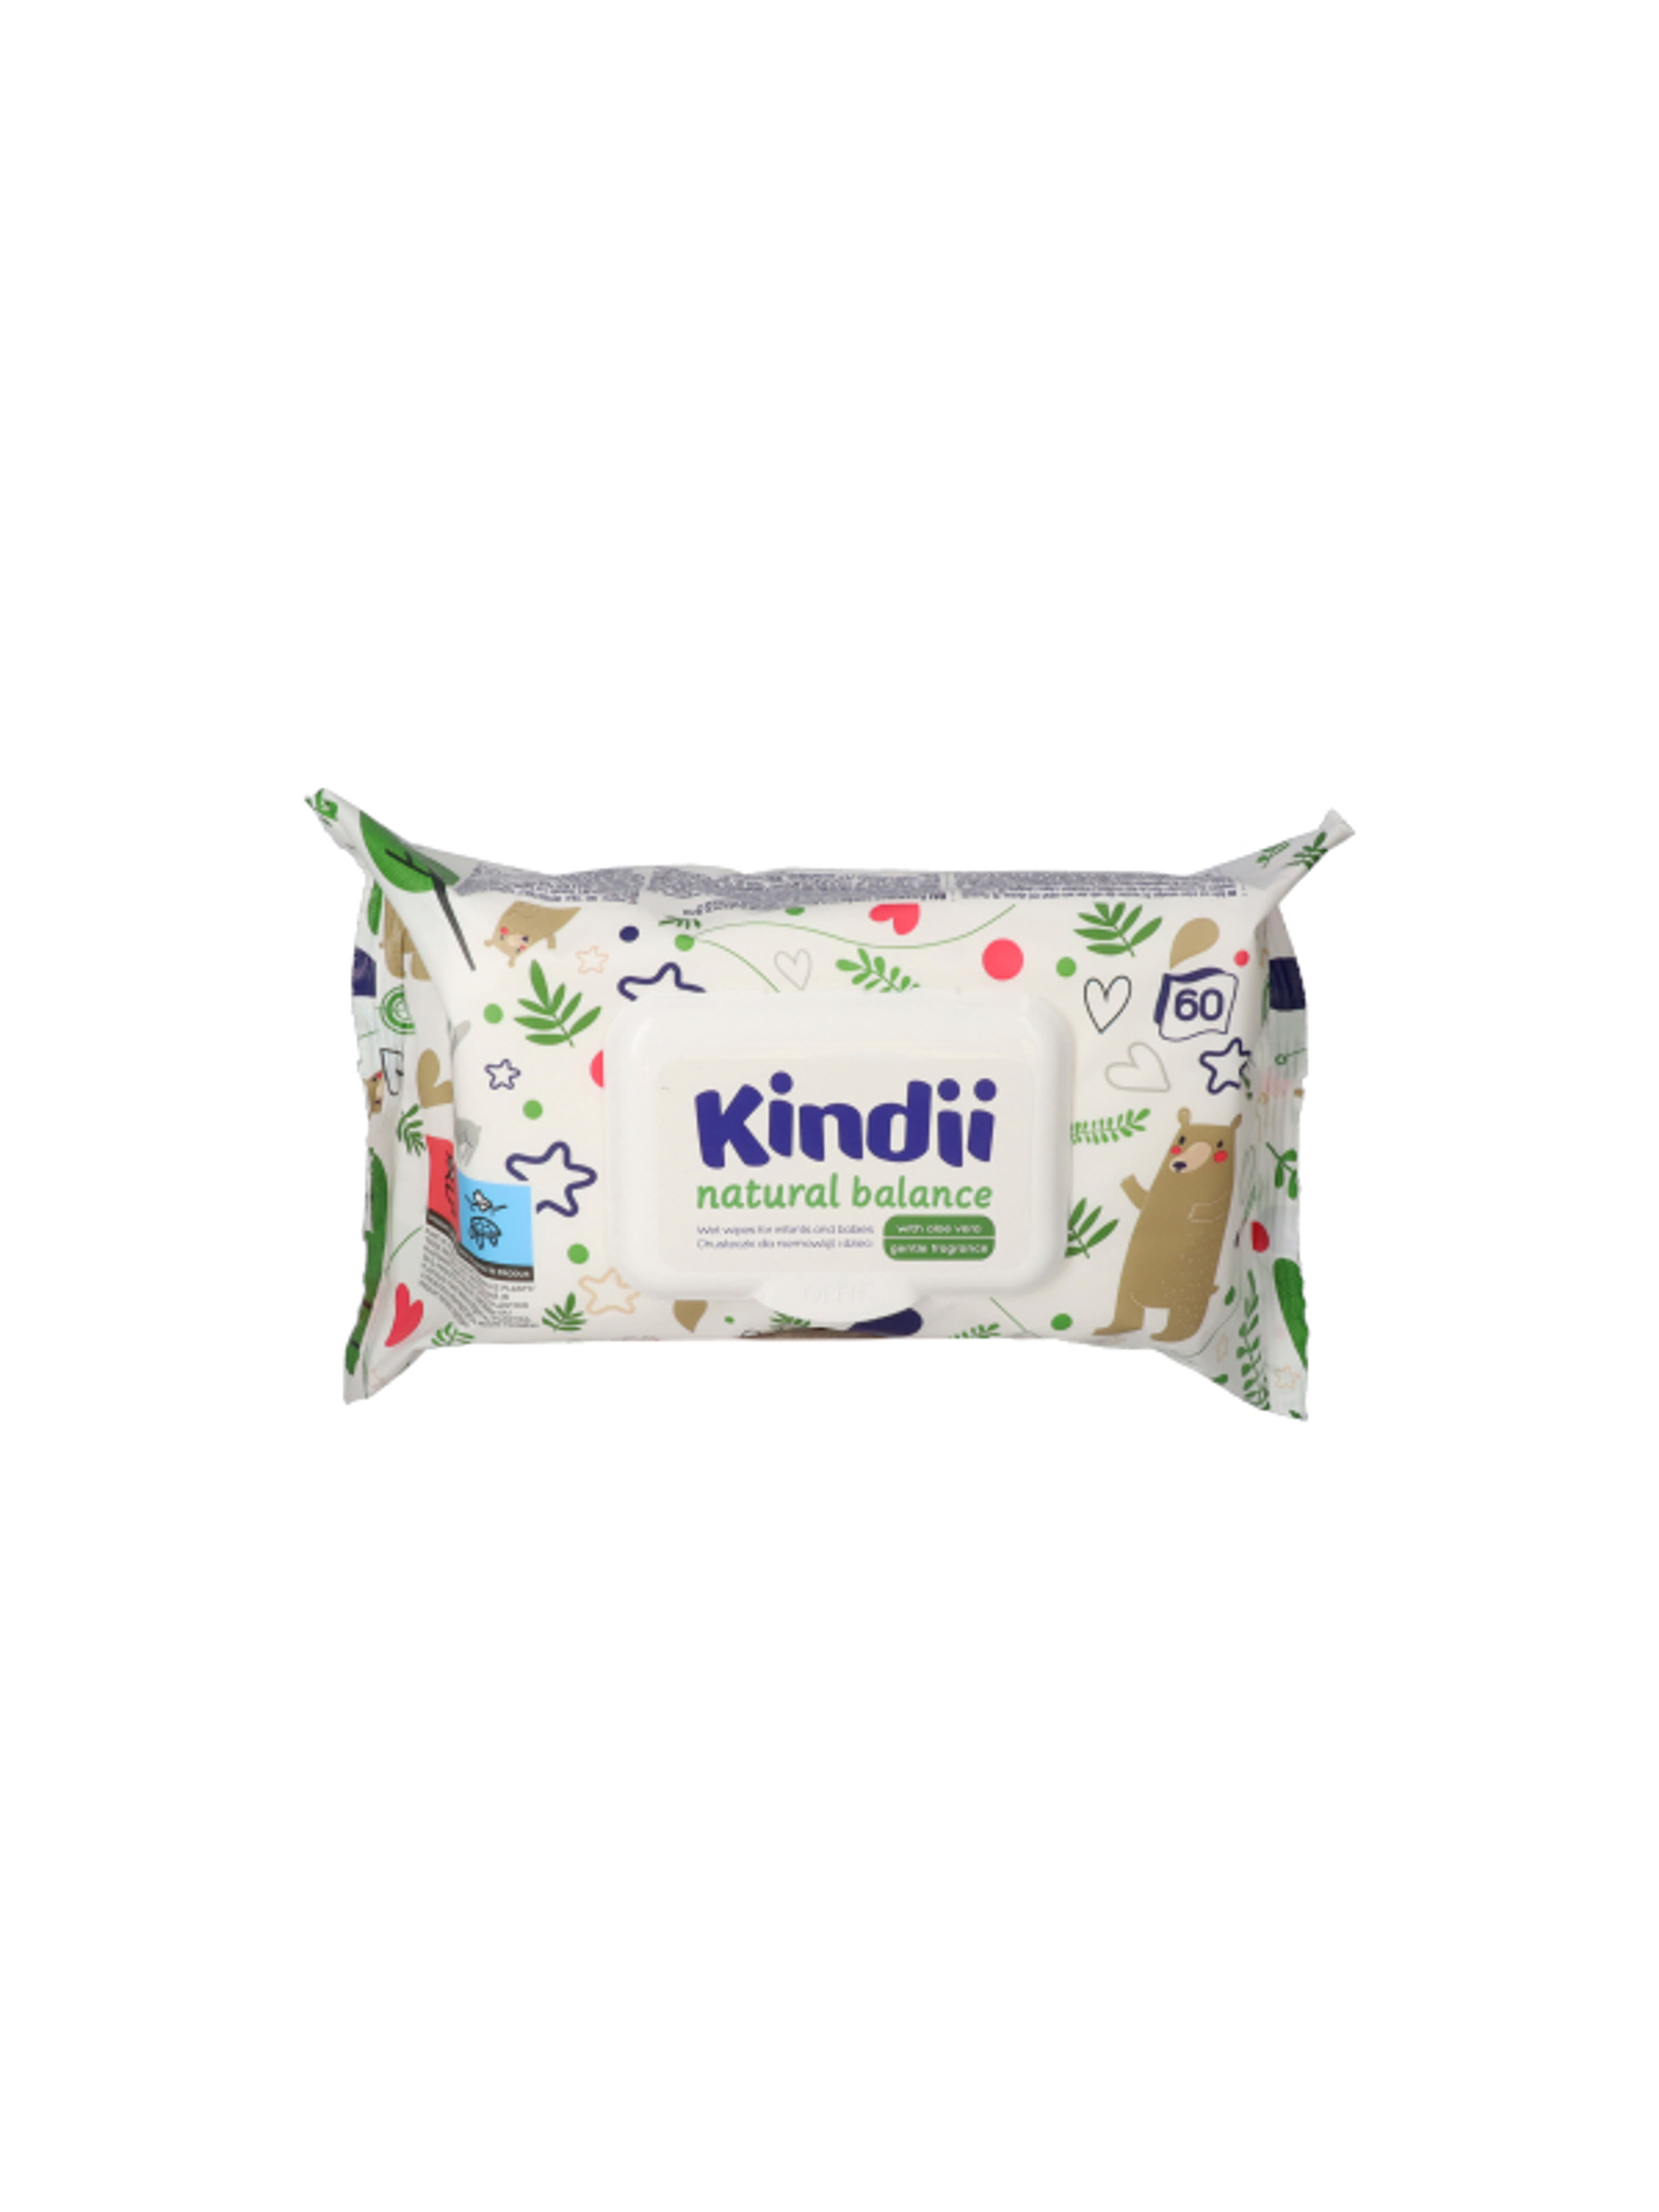 Kindii Natural Balance törlőkendő - 60 db